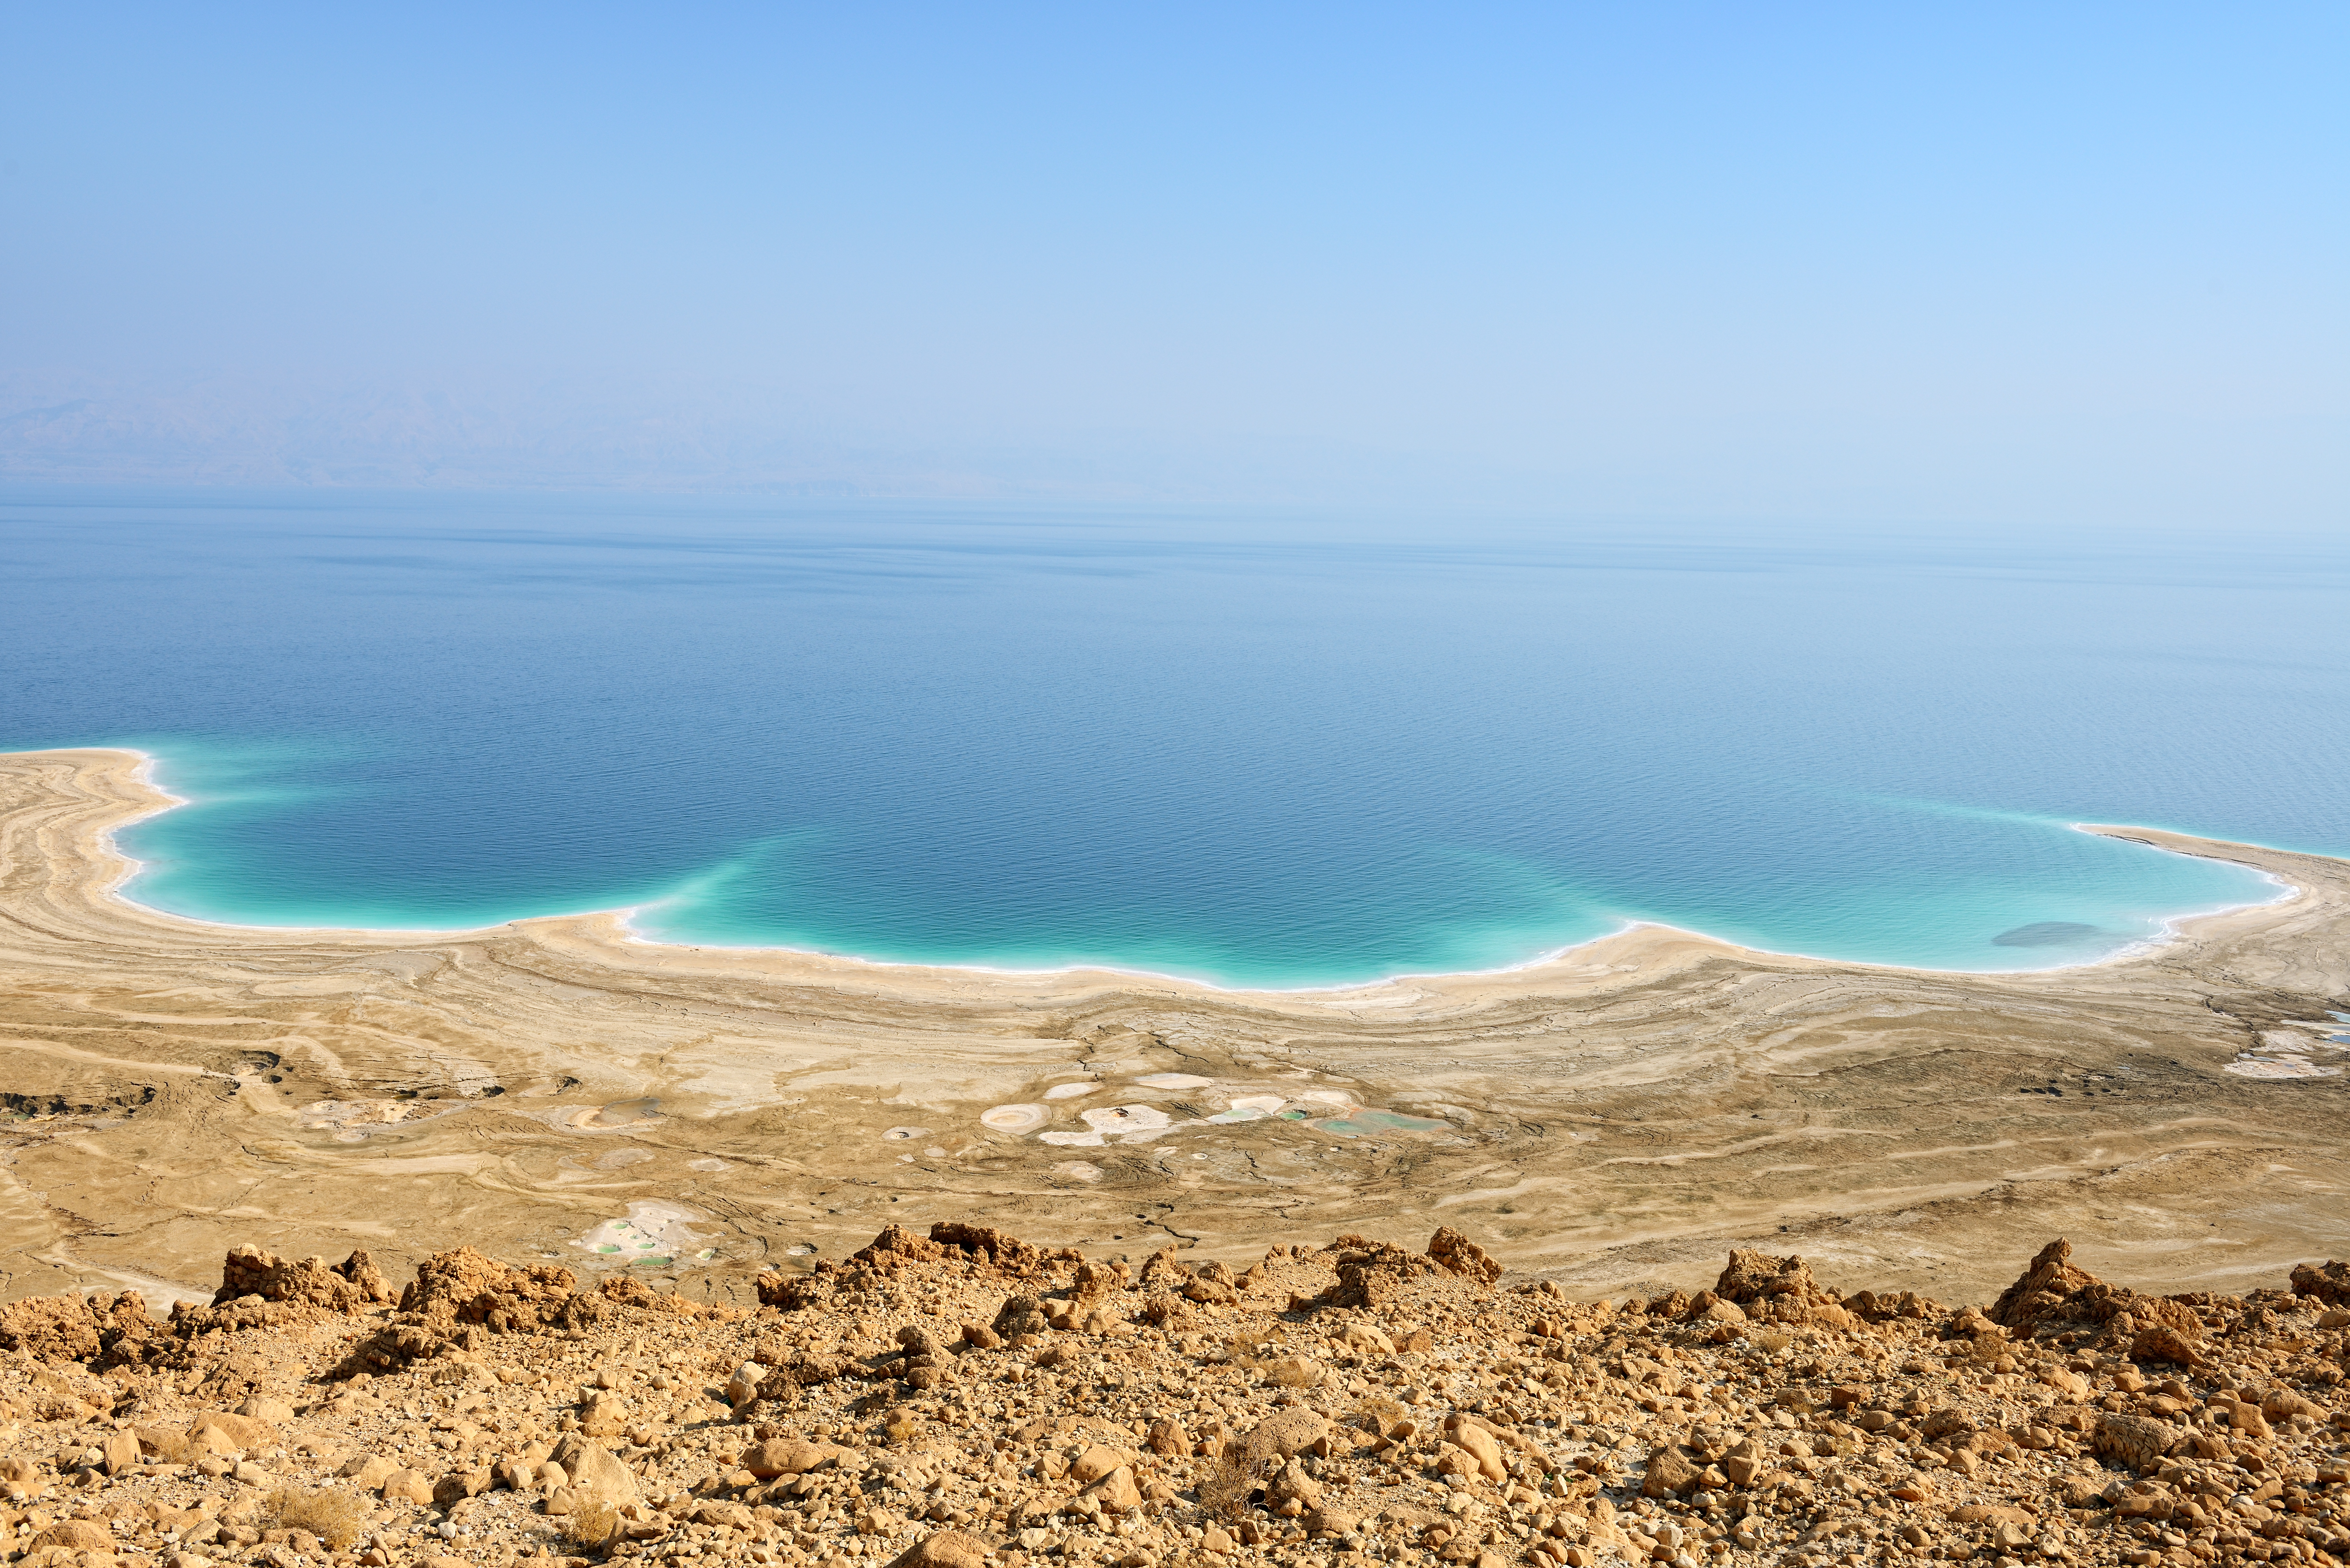 dead sea in the desert of israel